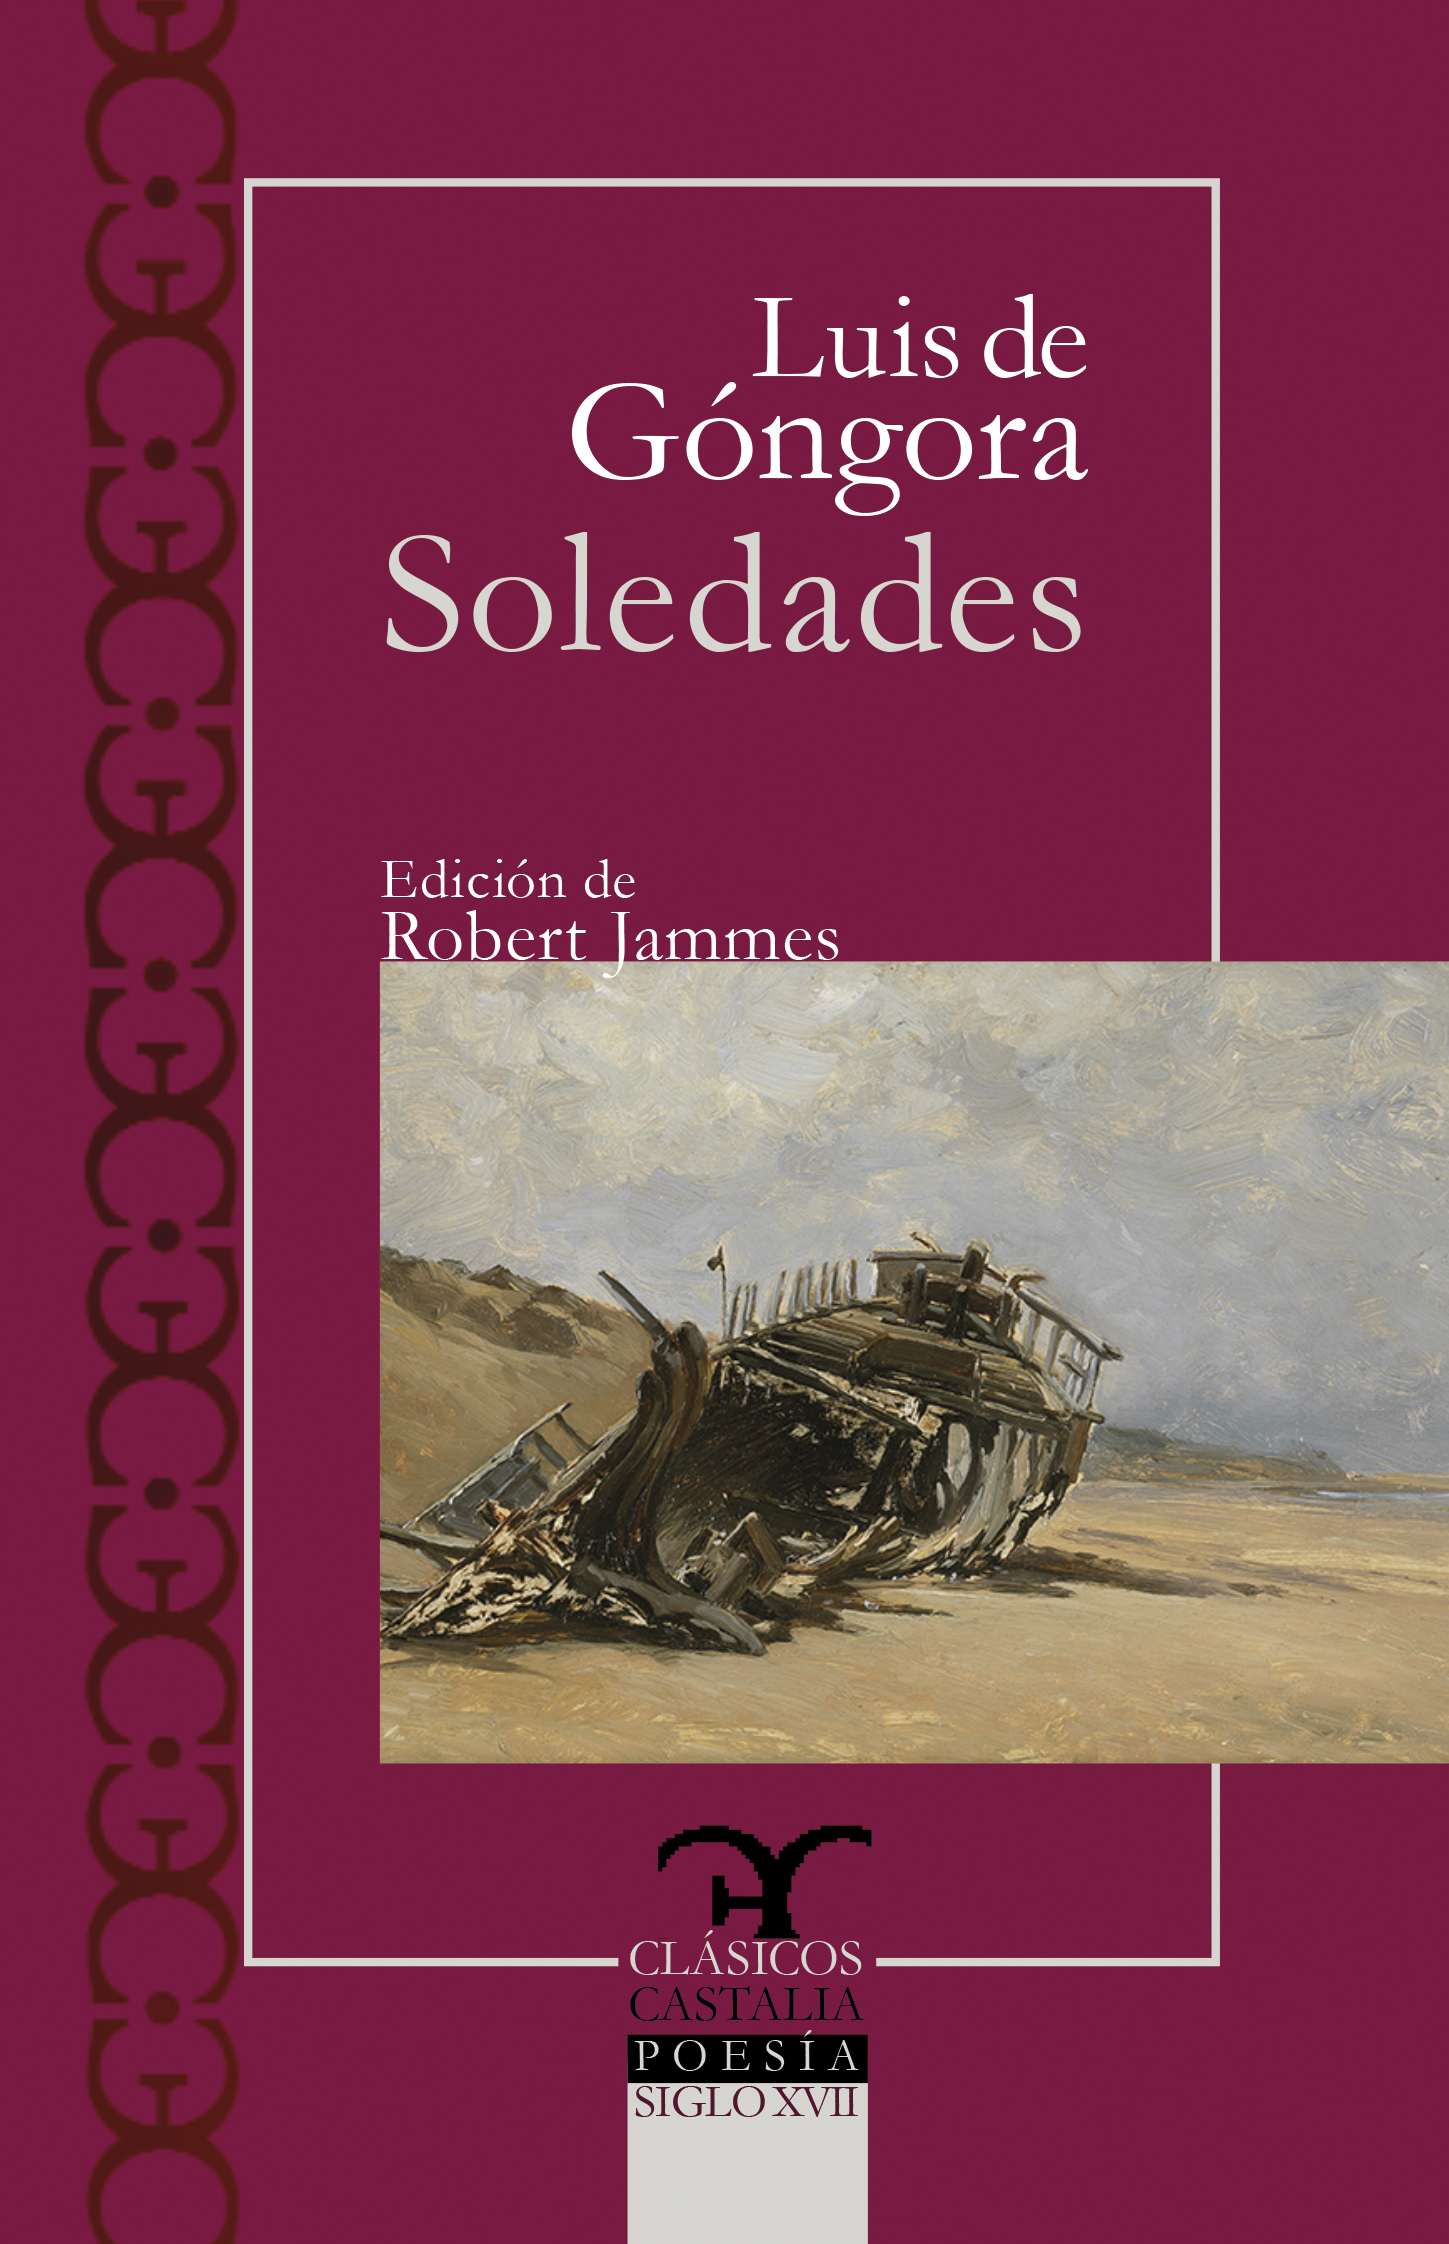 La obra poética de don Luis de Góngora